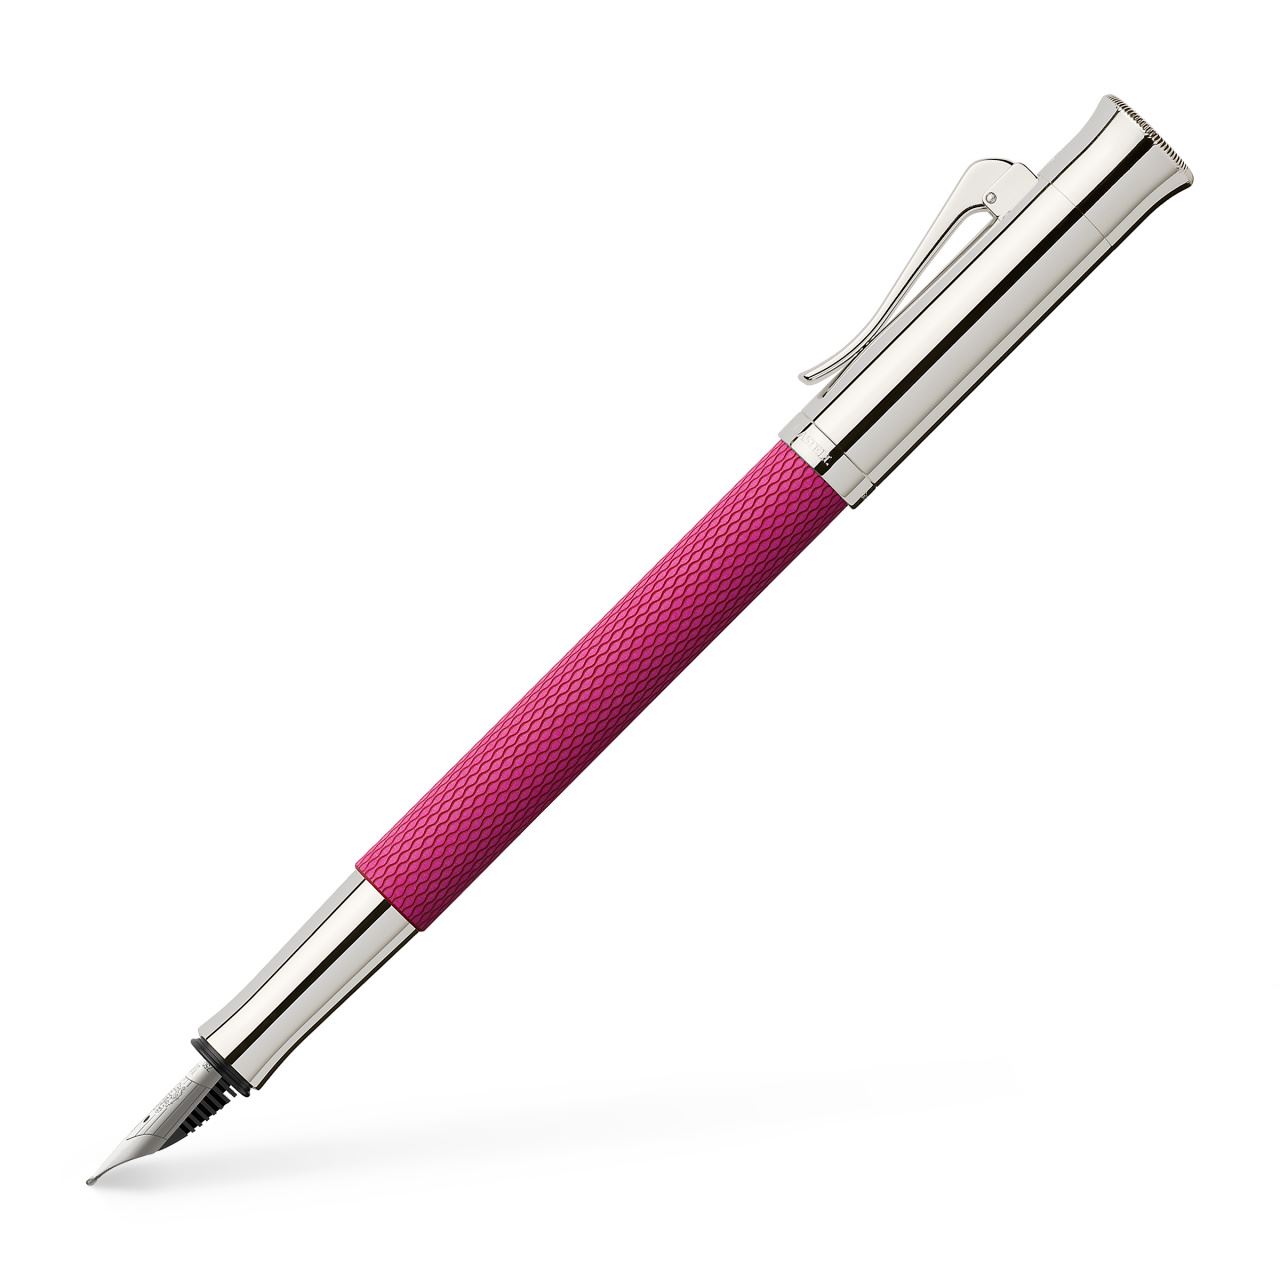 Graf-von-Faber-Castell - Fountain pen Guilloche Electric Pink F